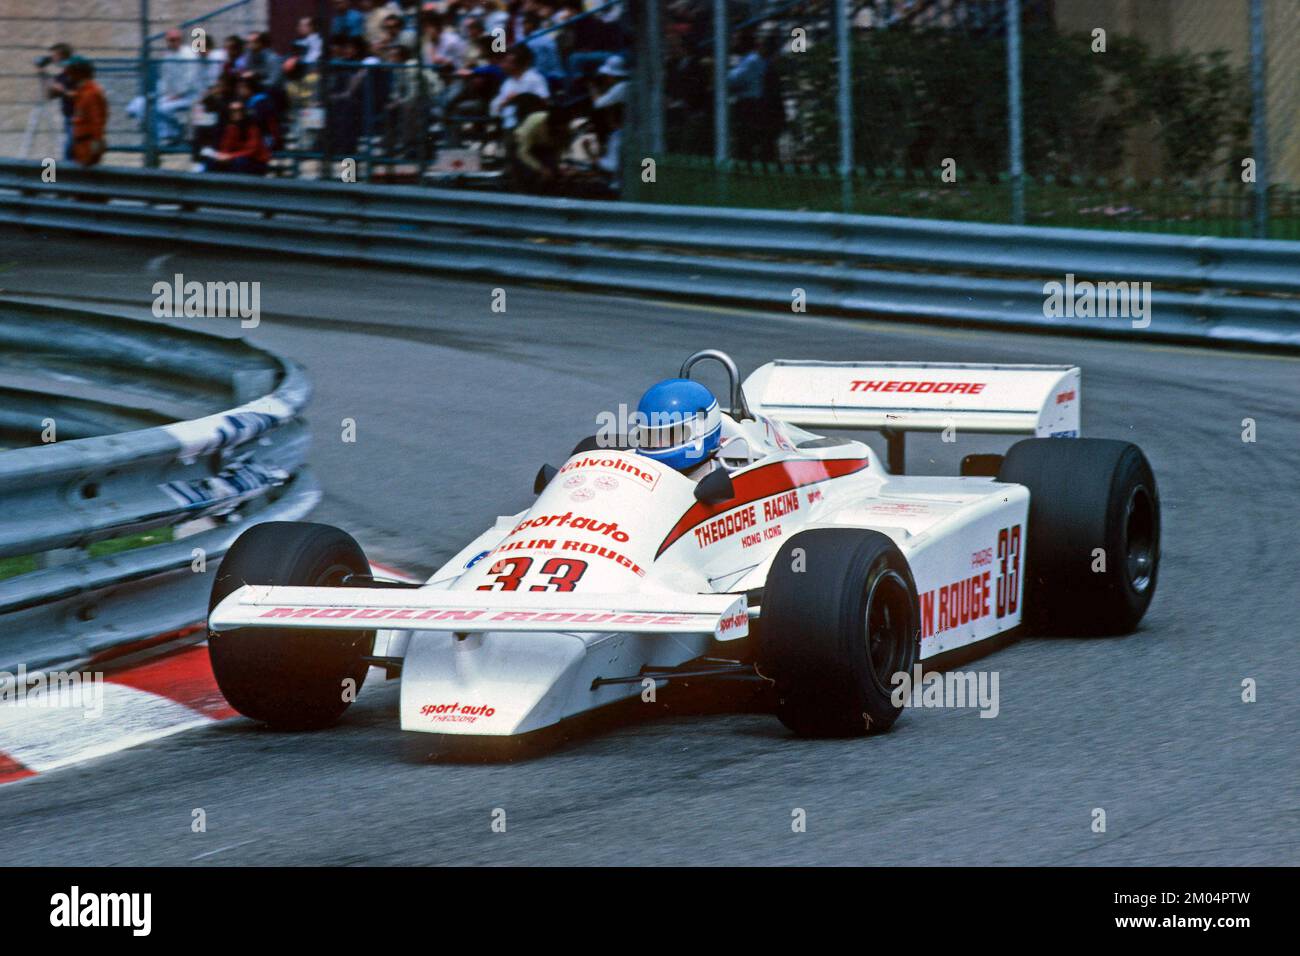 MOTORSPORT - F1 1981 - MONACO GP - MONTE-CARLO (MON) - 31/05/1981 - PHOTO : DPPI - Patrick TAMBAY - Theodore Racing Team - Theodore TY01 Ford Cosworth- Action Stock Photo